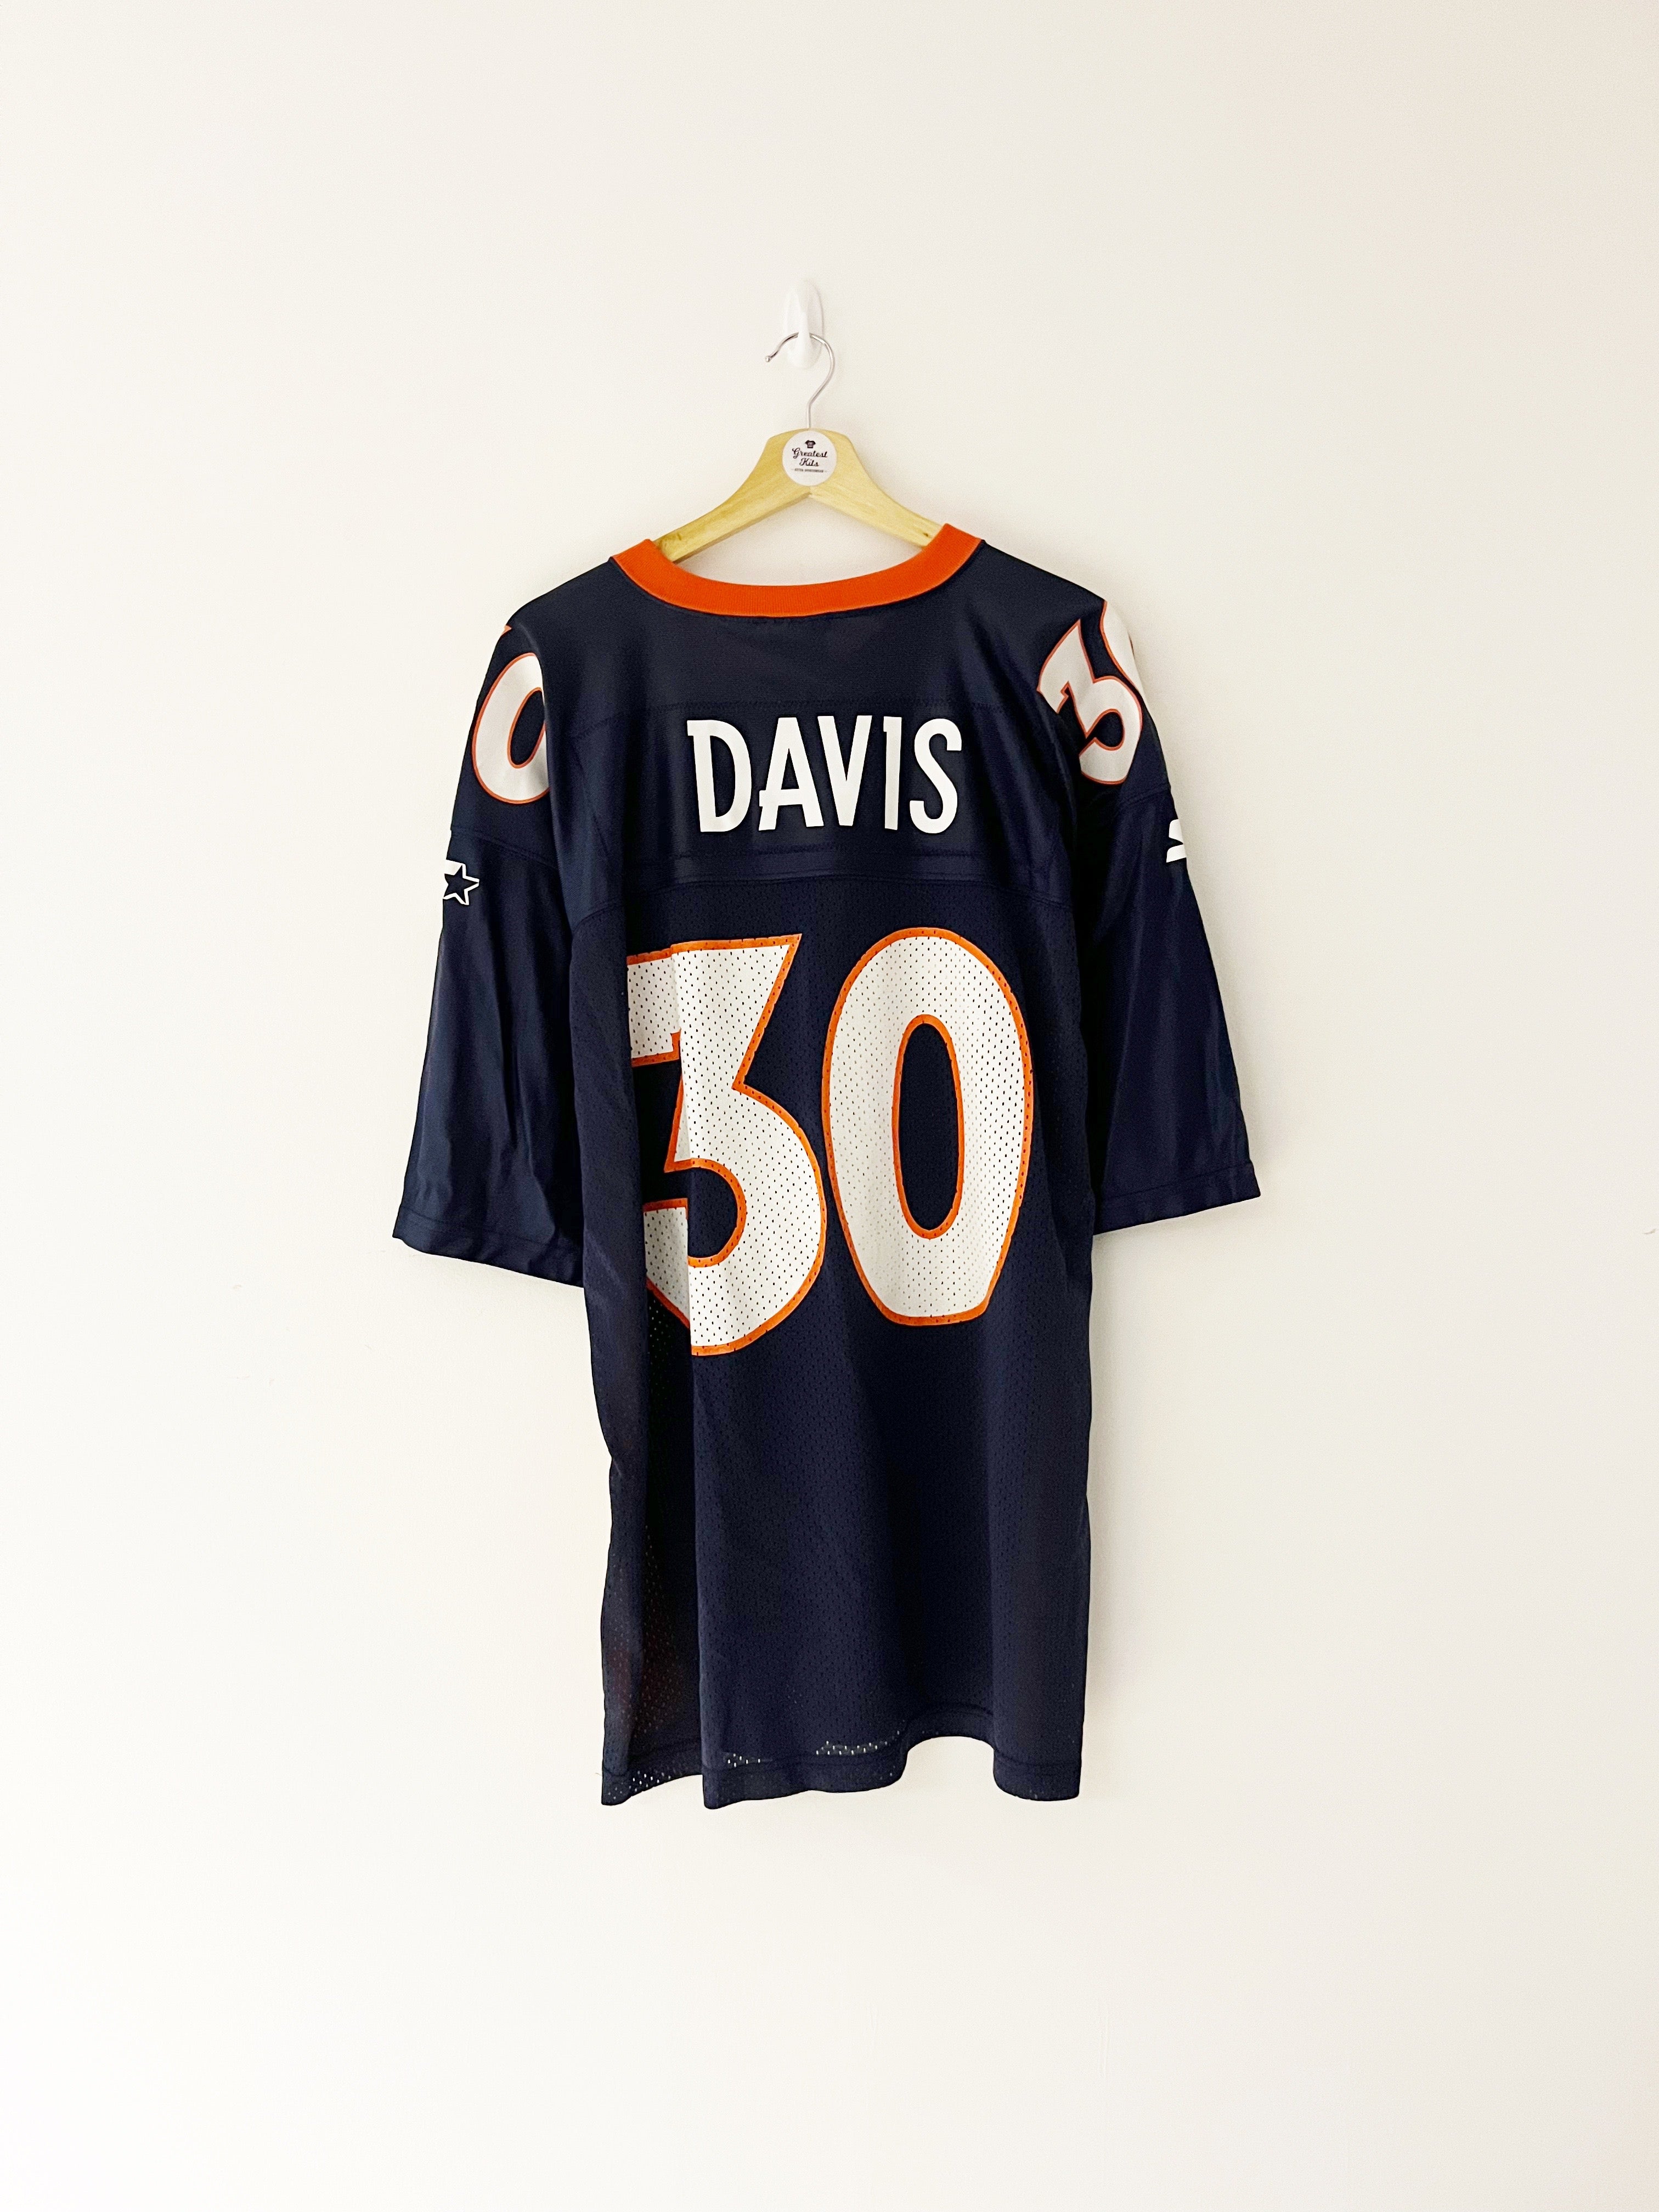 1997/98 Denver Broncos Alternate Starter Jersey Davis #30 (XL) 9/10